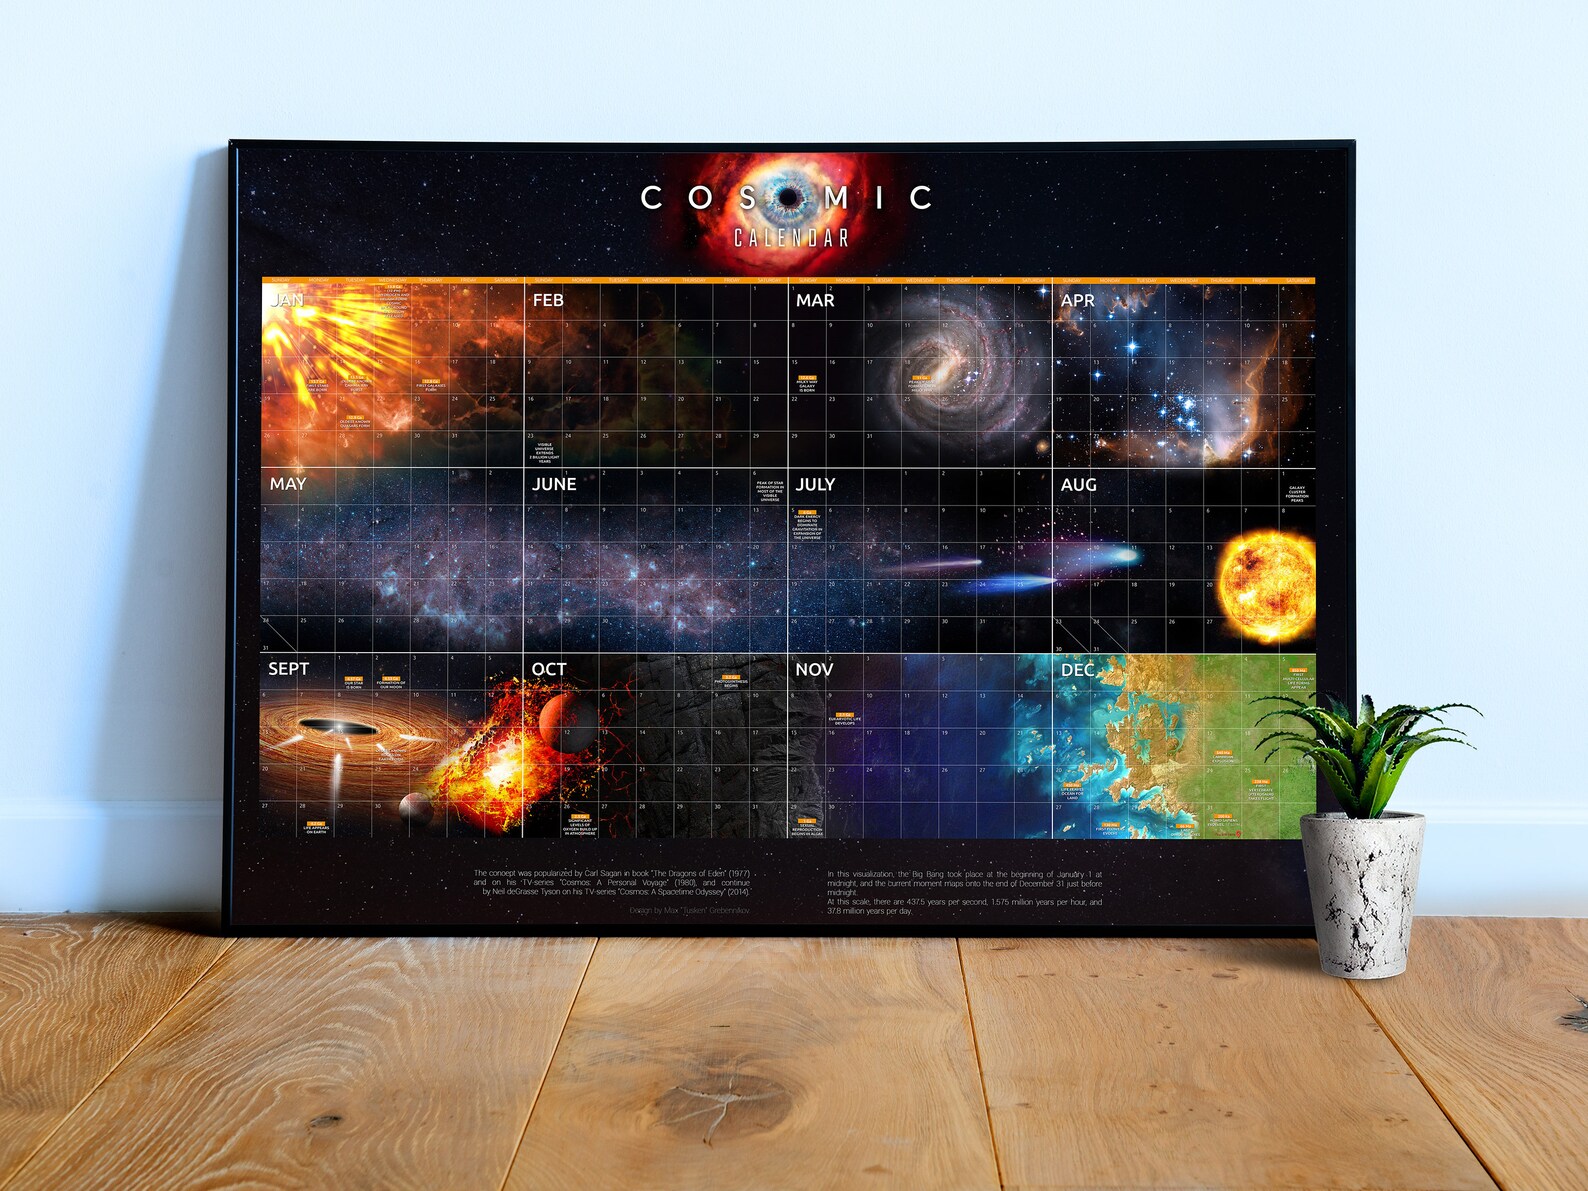 Cosmic Calendar carl Sagan Style Universe Evolution Chart Etsy